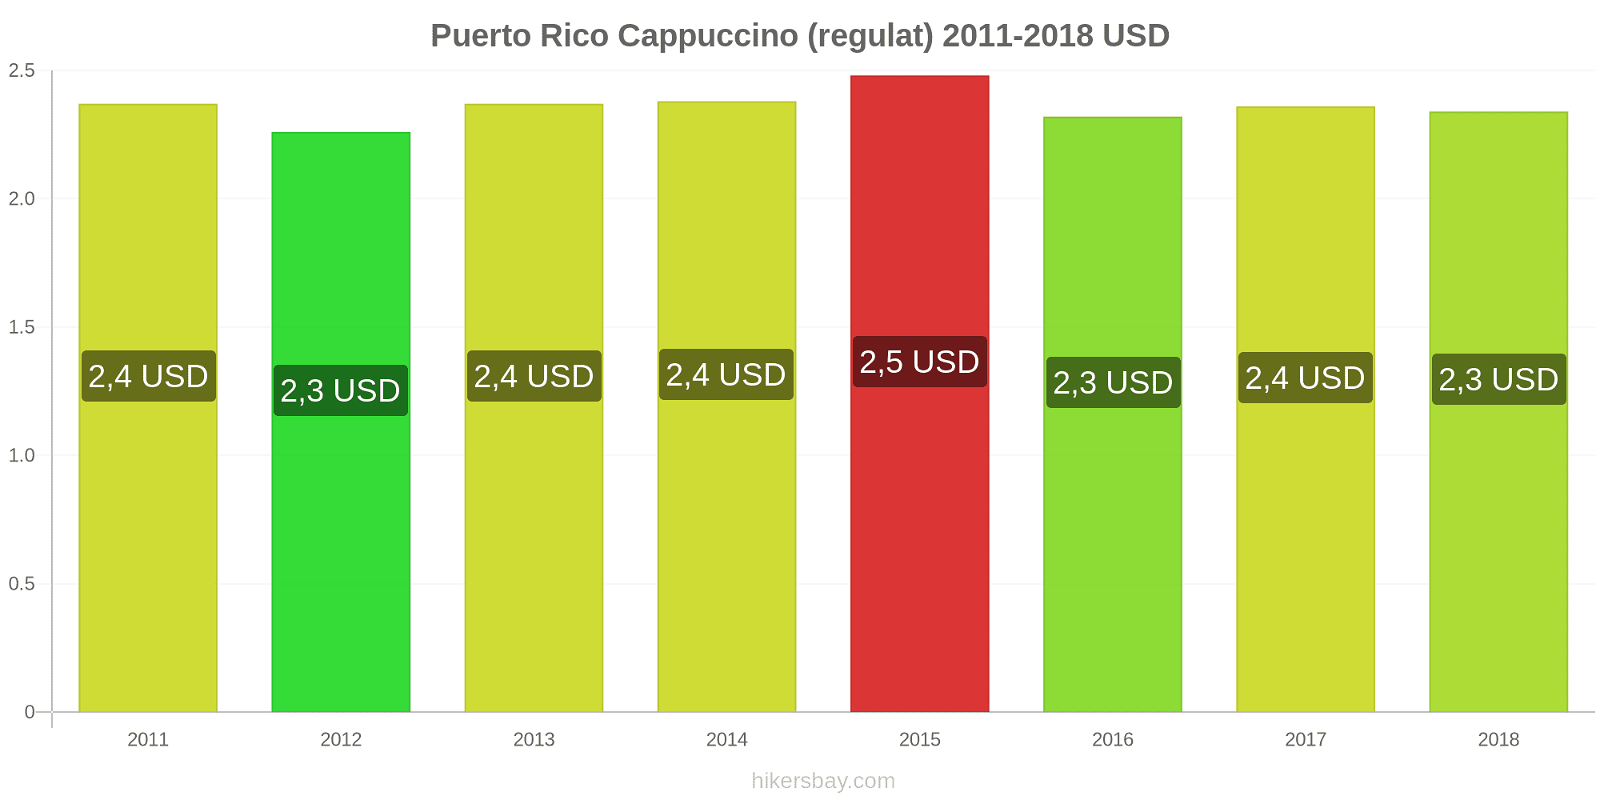 Puerto Rico schimbări de prețuri Cappuccino hikersbay.com